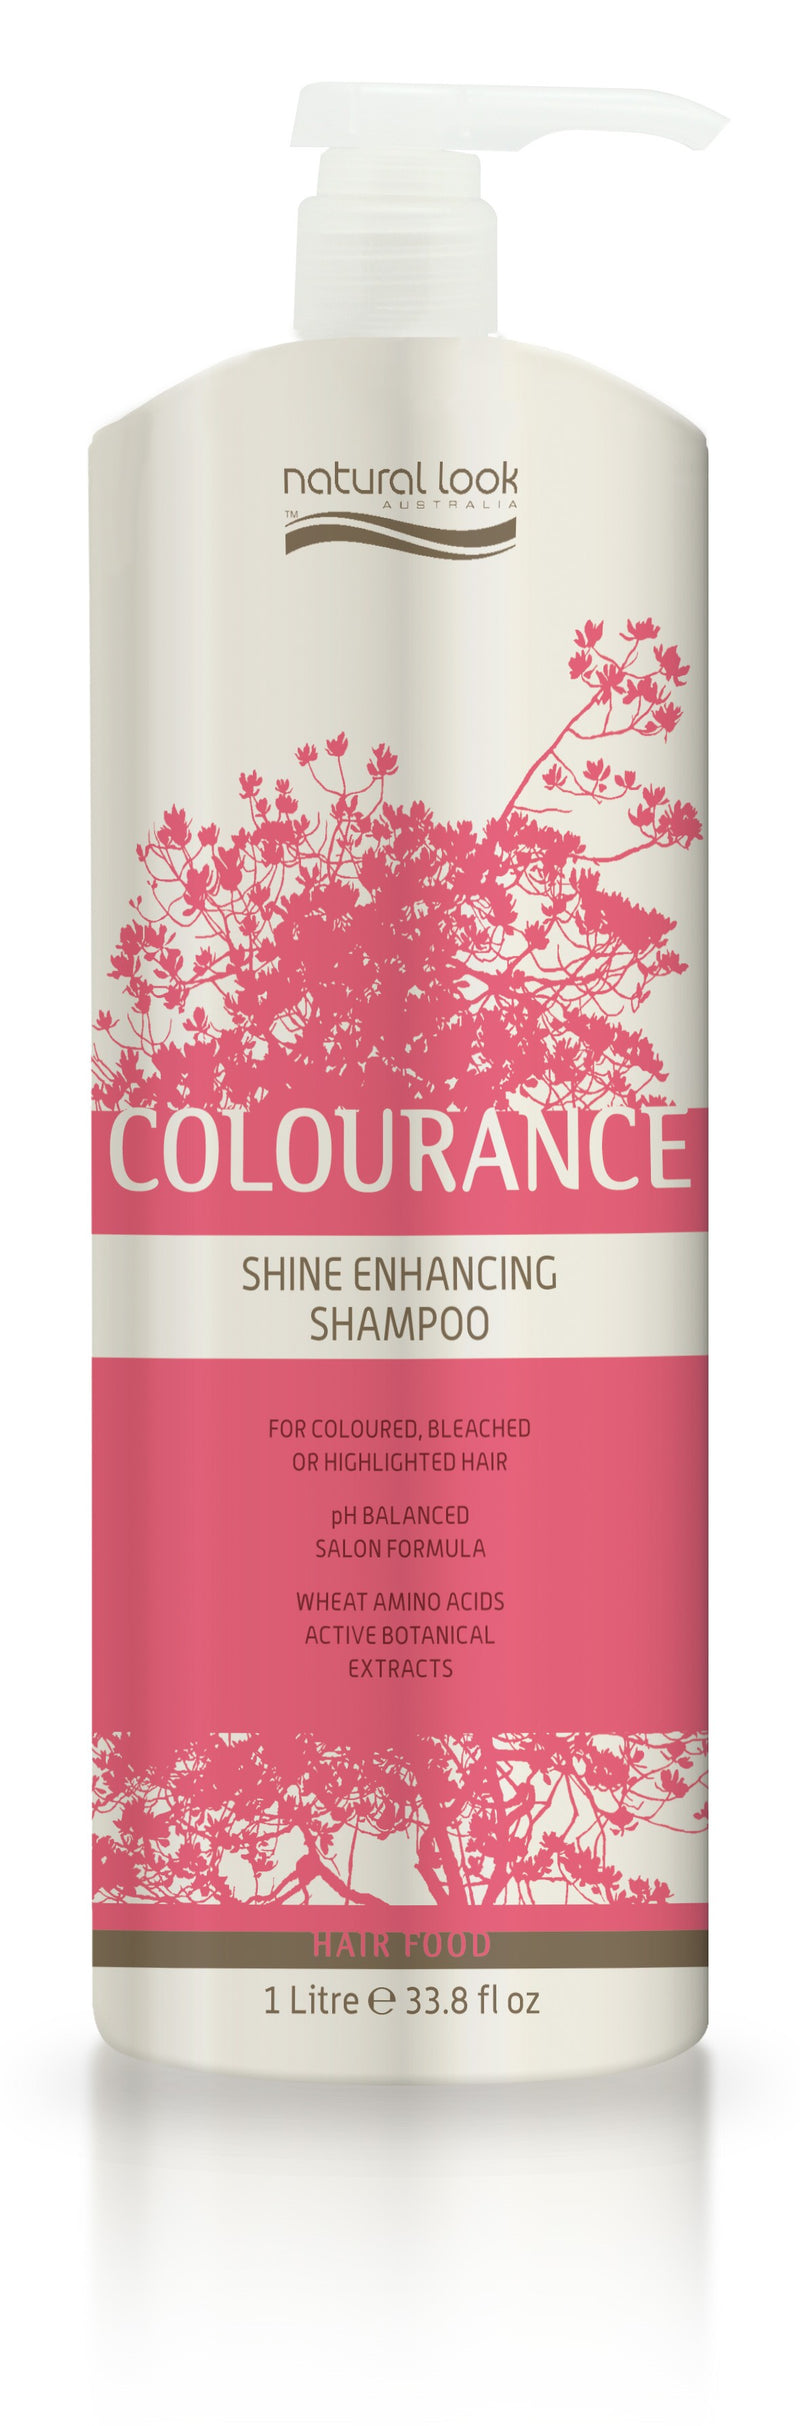 Natural Look Colourance Shine Enhancing Shampoo 1L